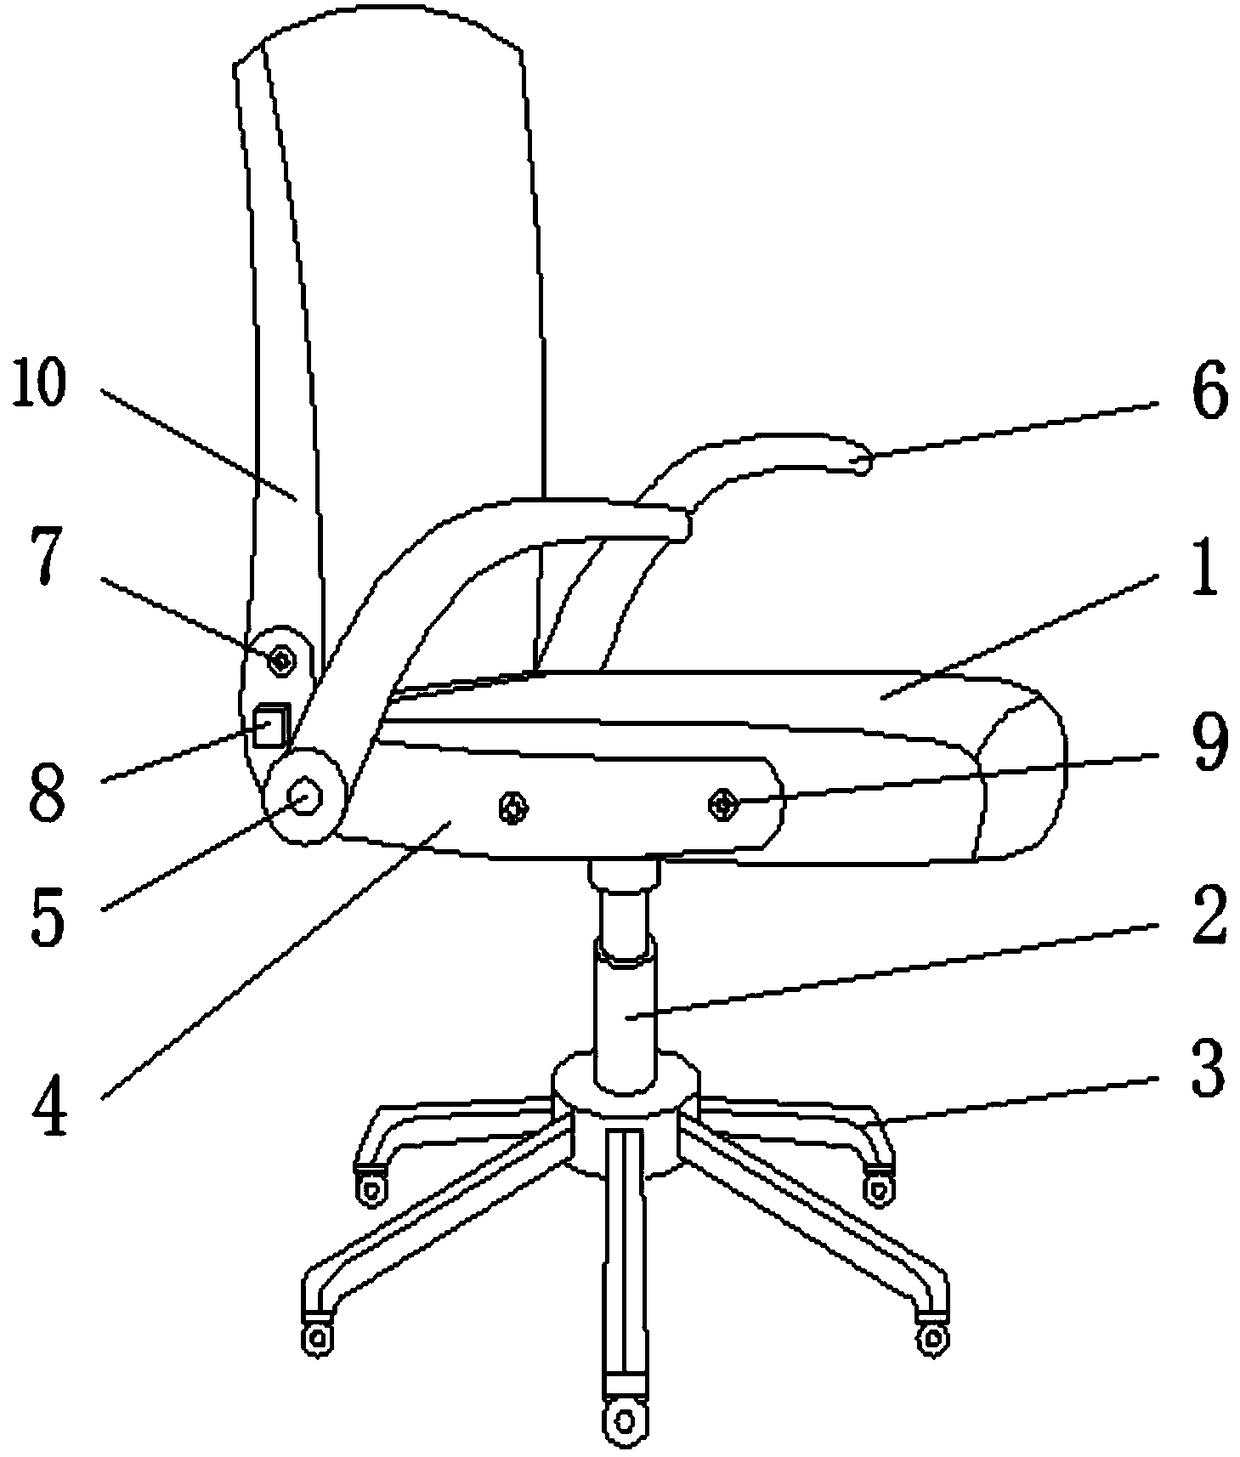 Folding rotary chair